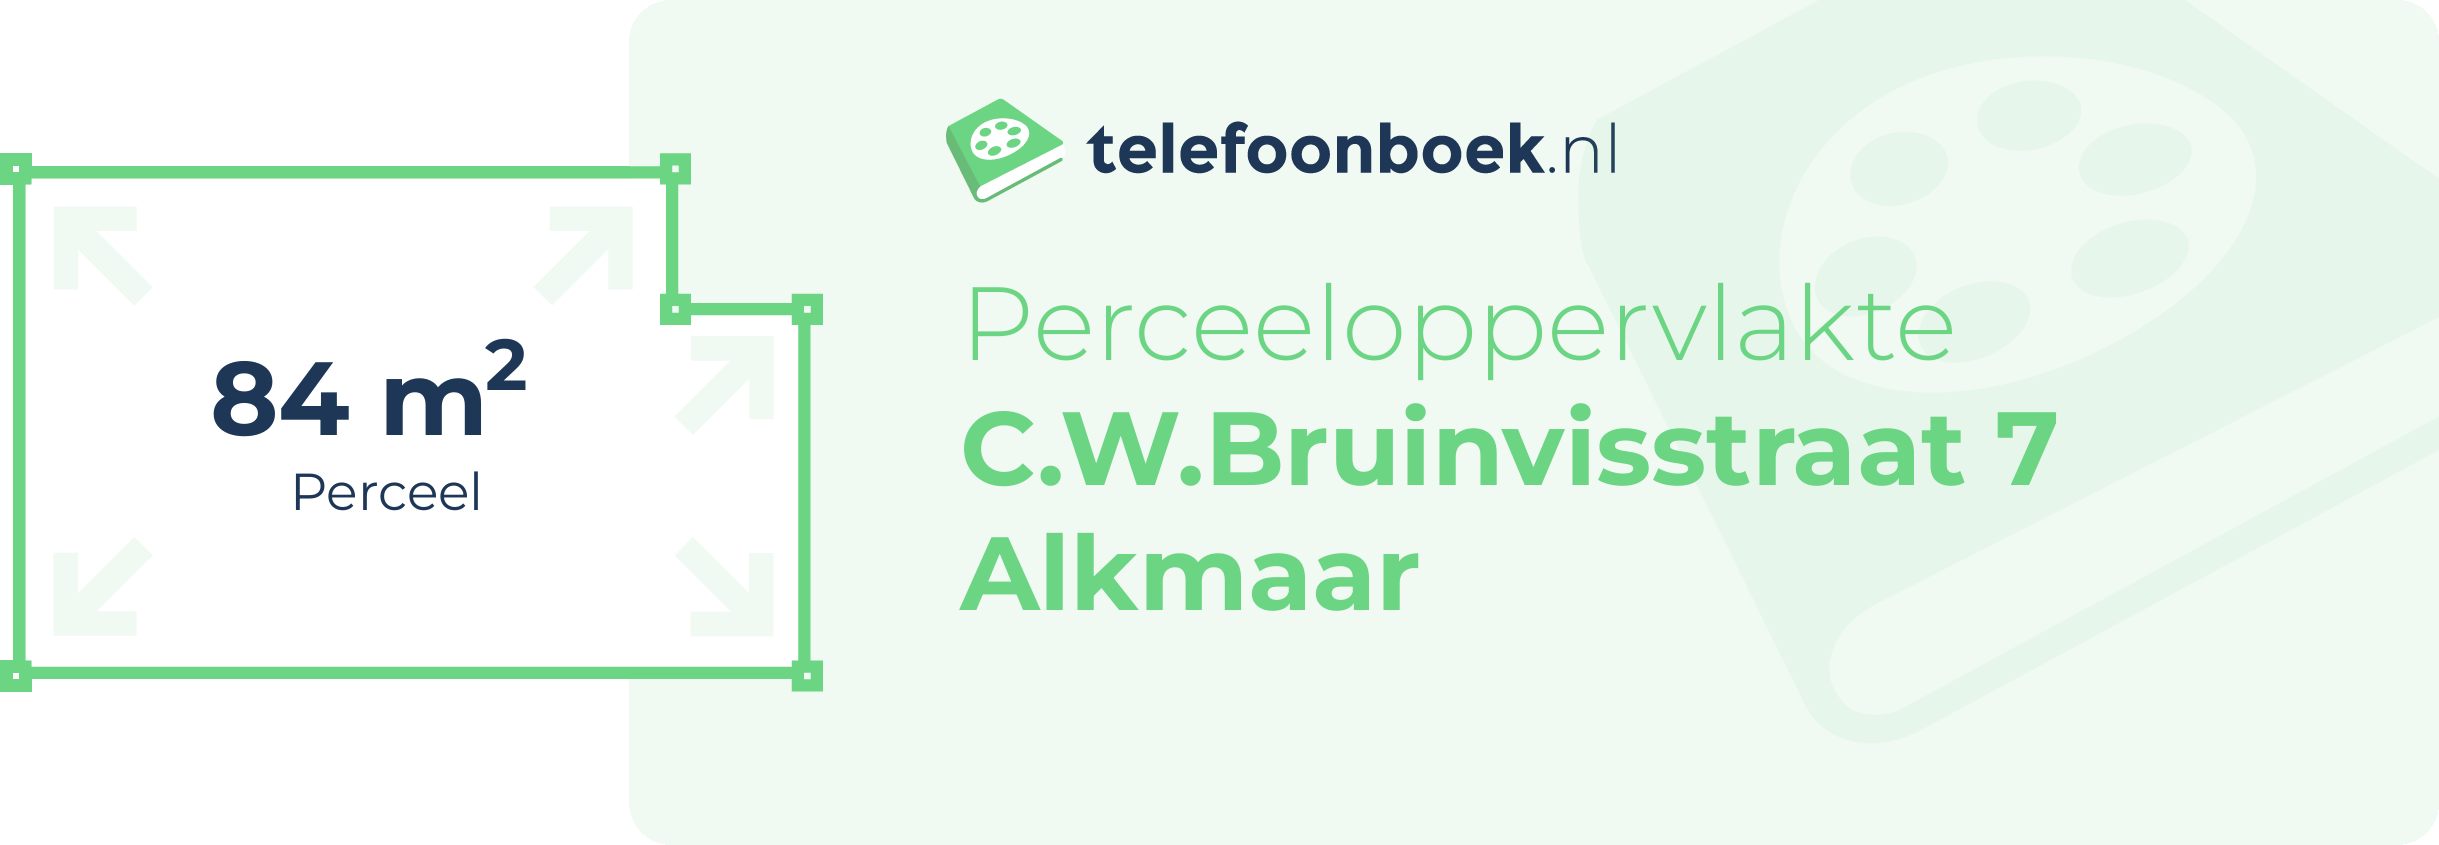 Perceeloppervlakte C.W.Bruinvisstraat 7 Alkmaar